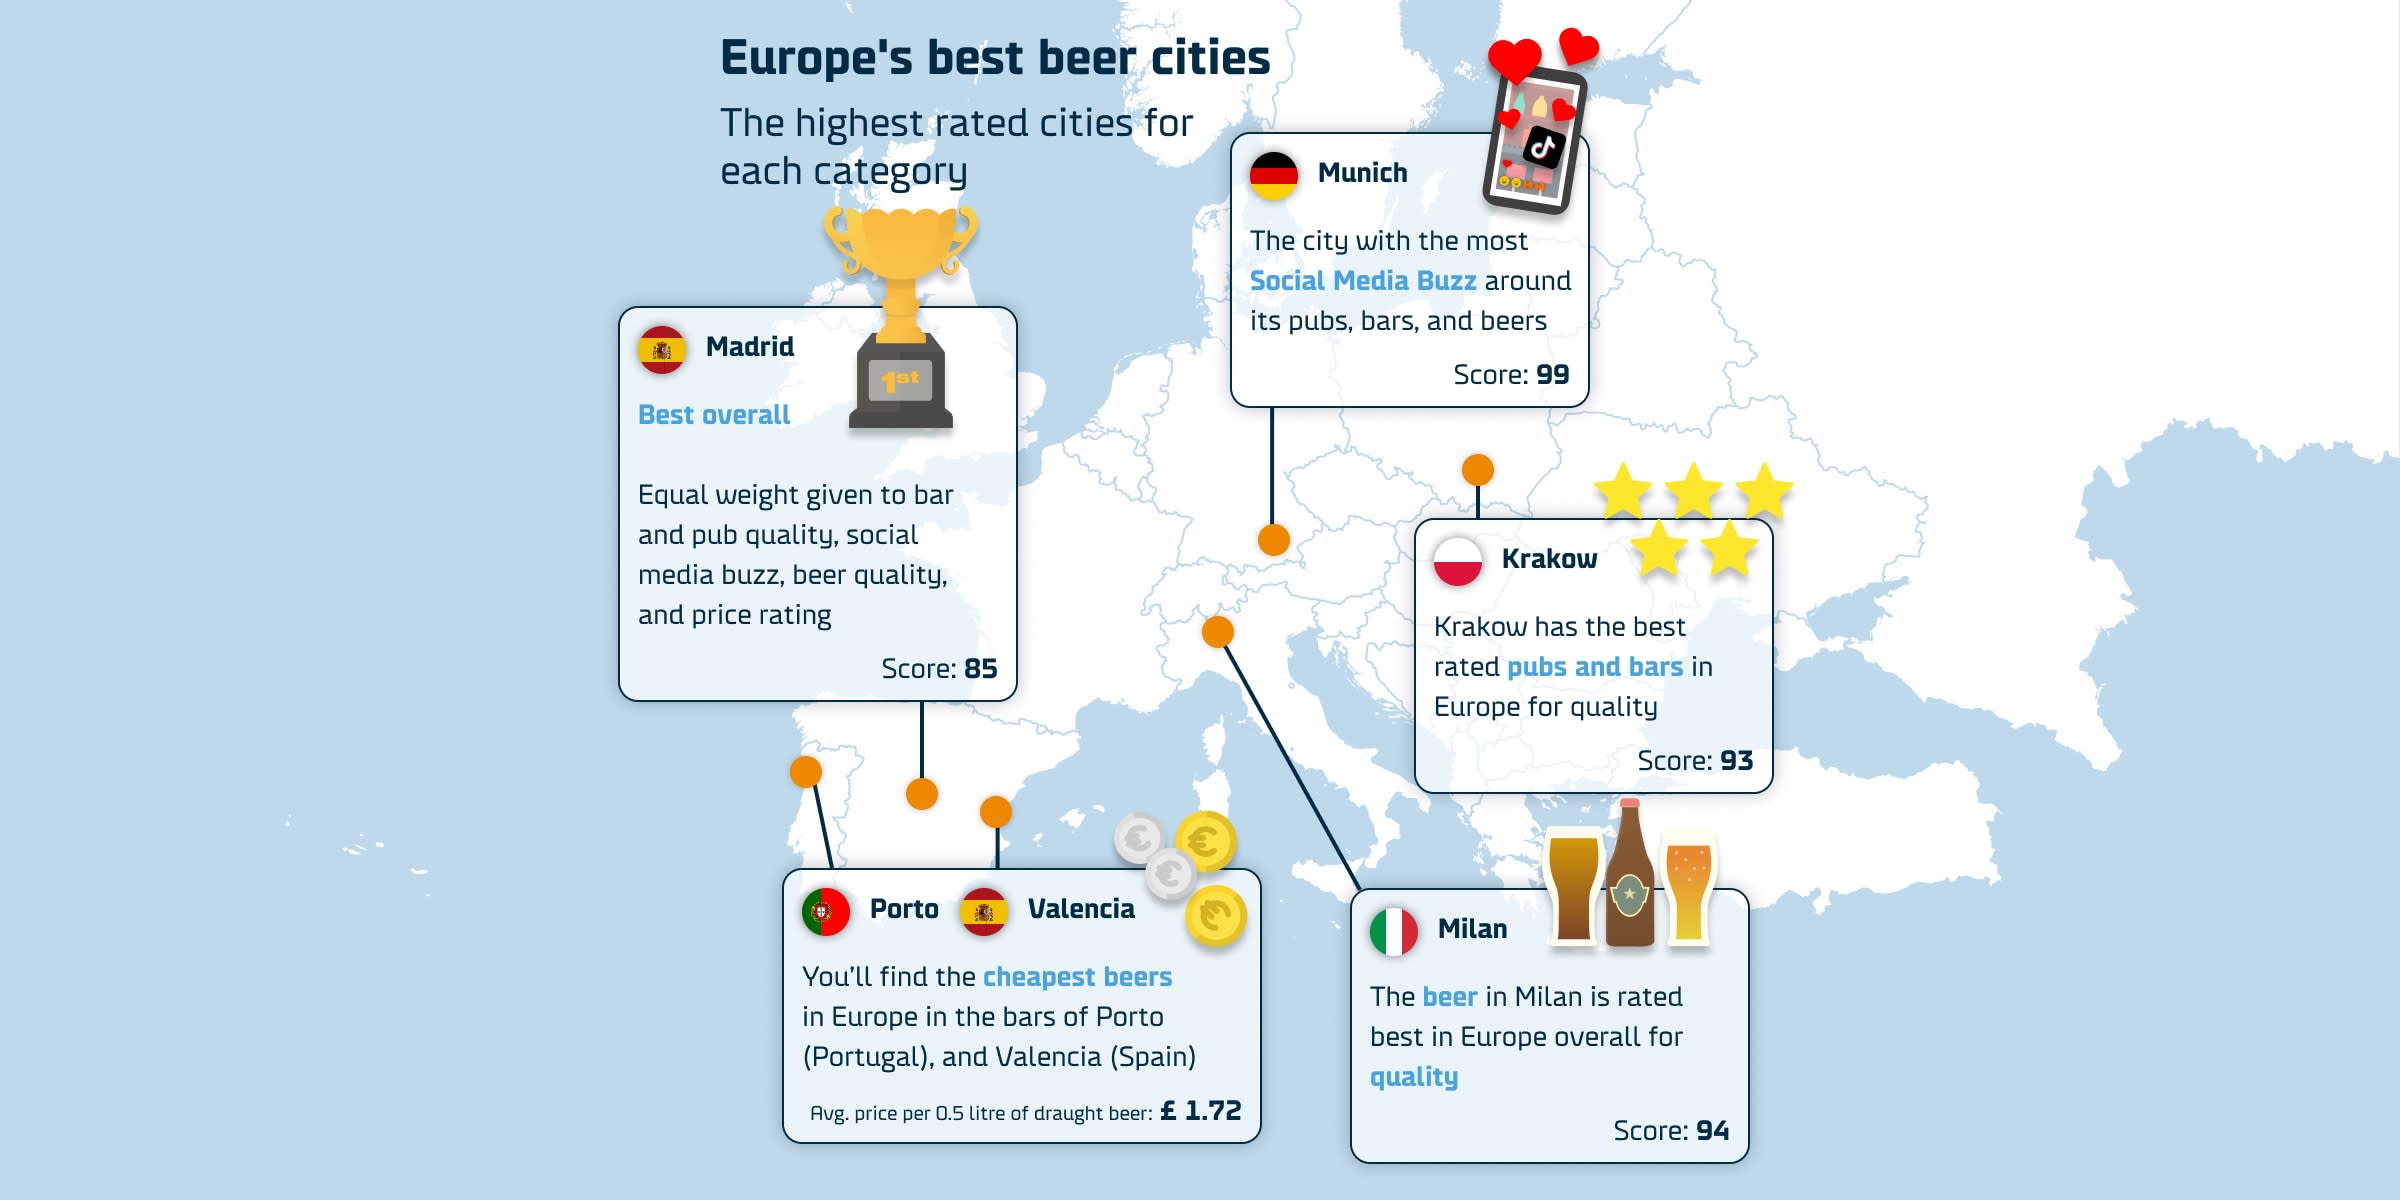 Europe’s best beer cities - Munich